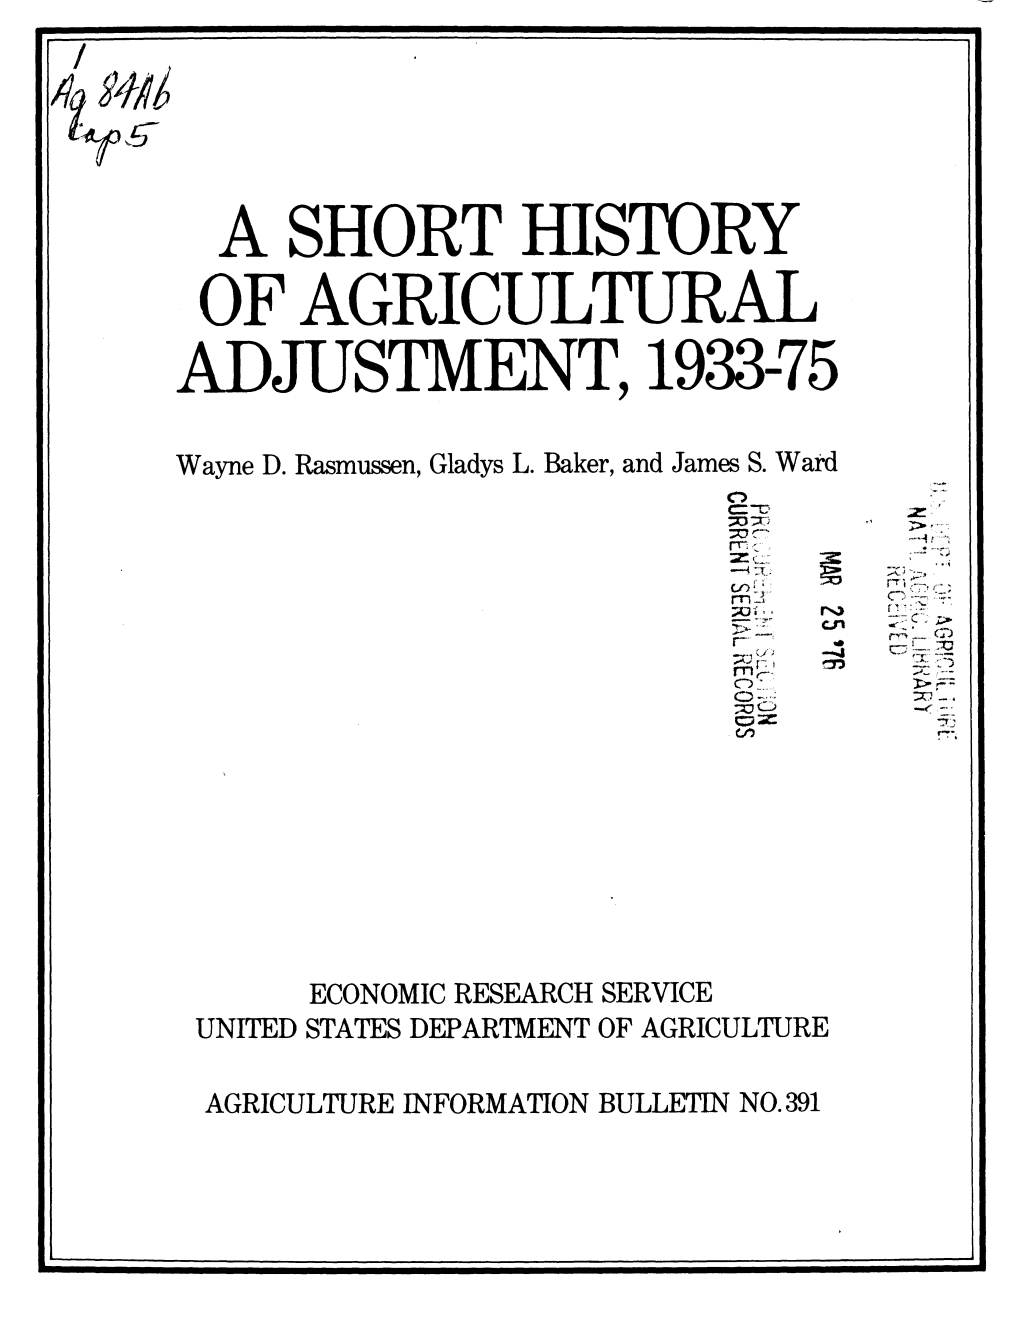 A Short History of Agricultural Adjustment, 1933-75